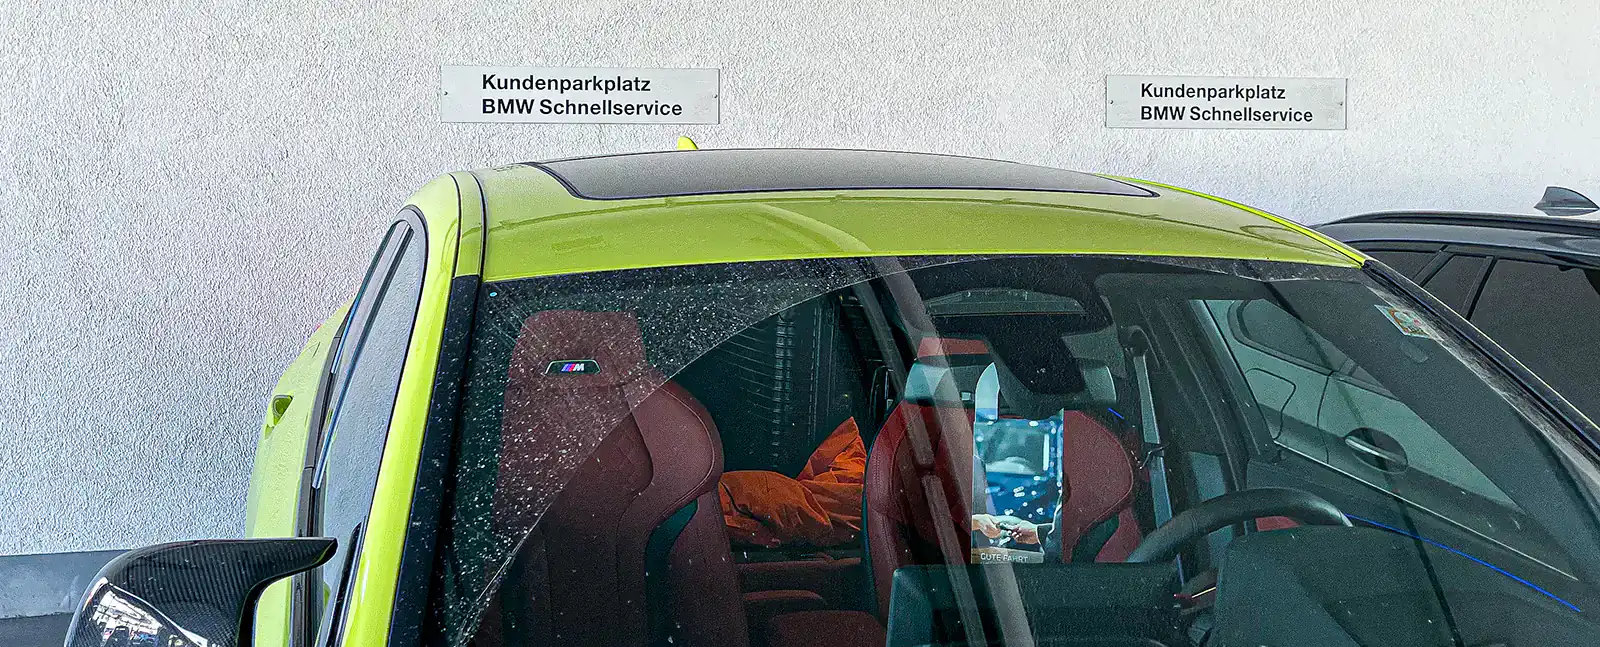 Tag-1-München-BMW-Automag